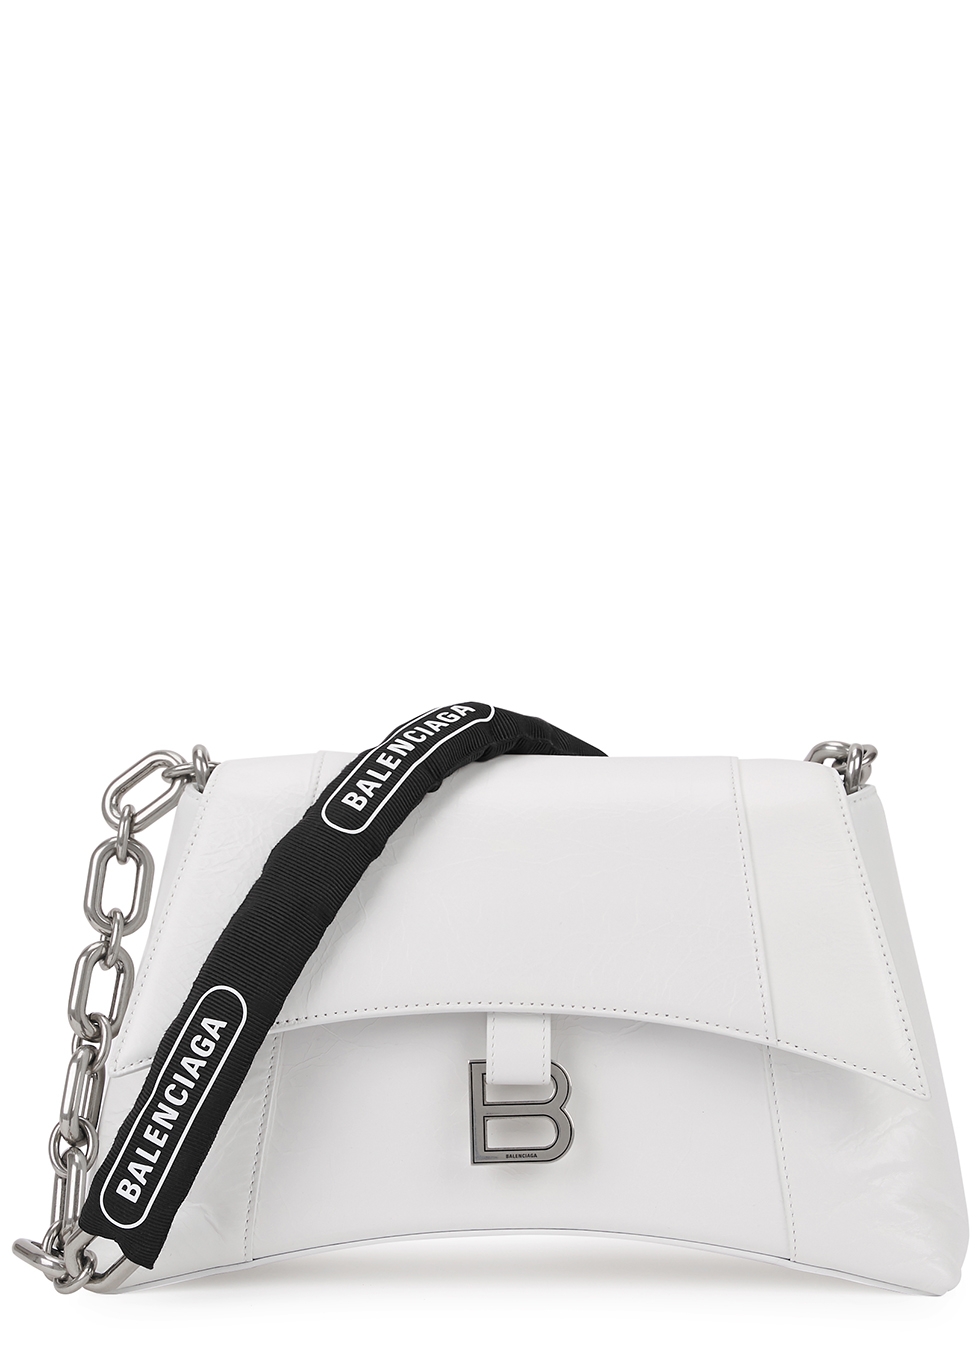 Balenciaga Downtown small white leather shoulder bag - Harvey Nichols